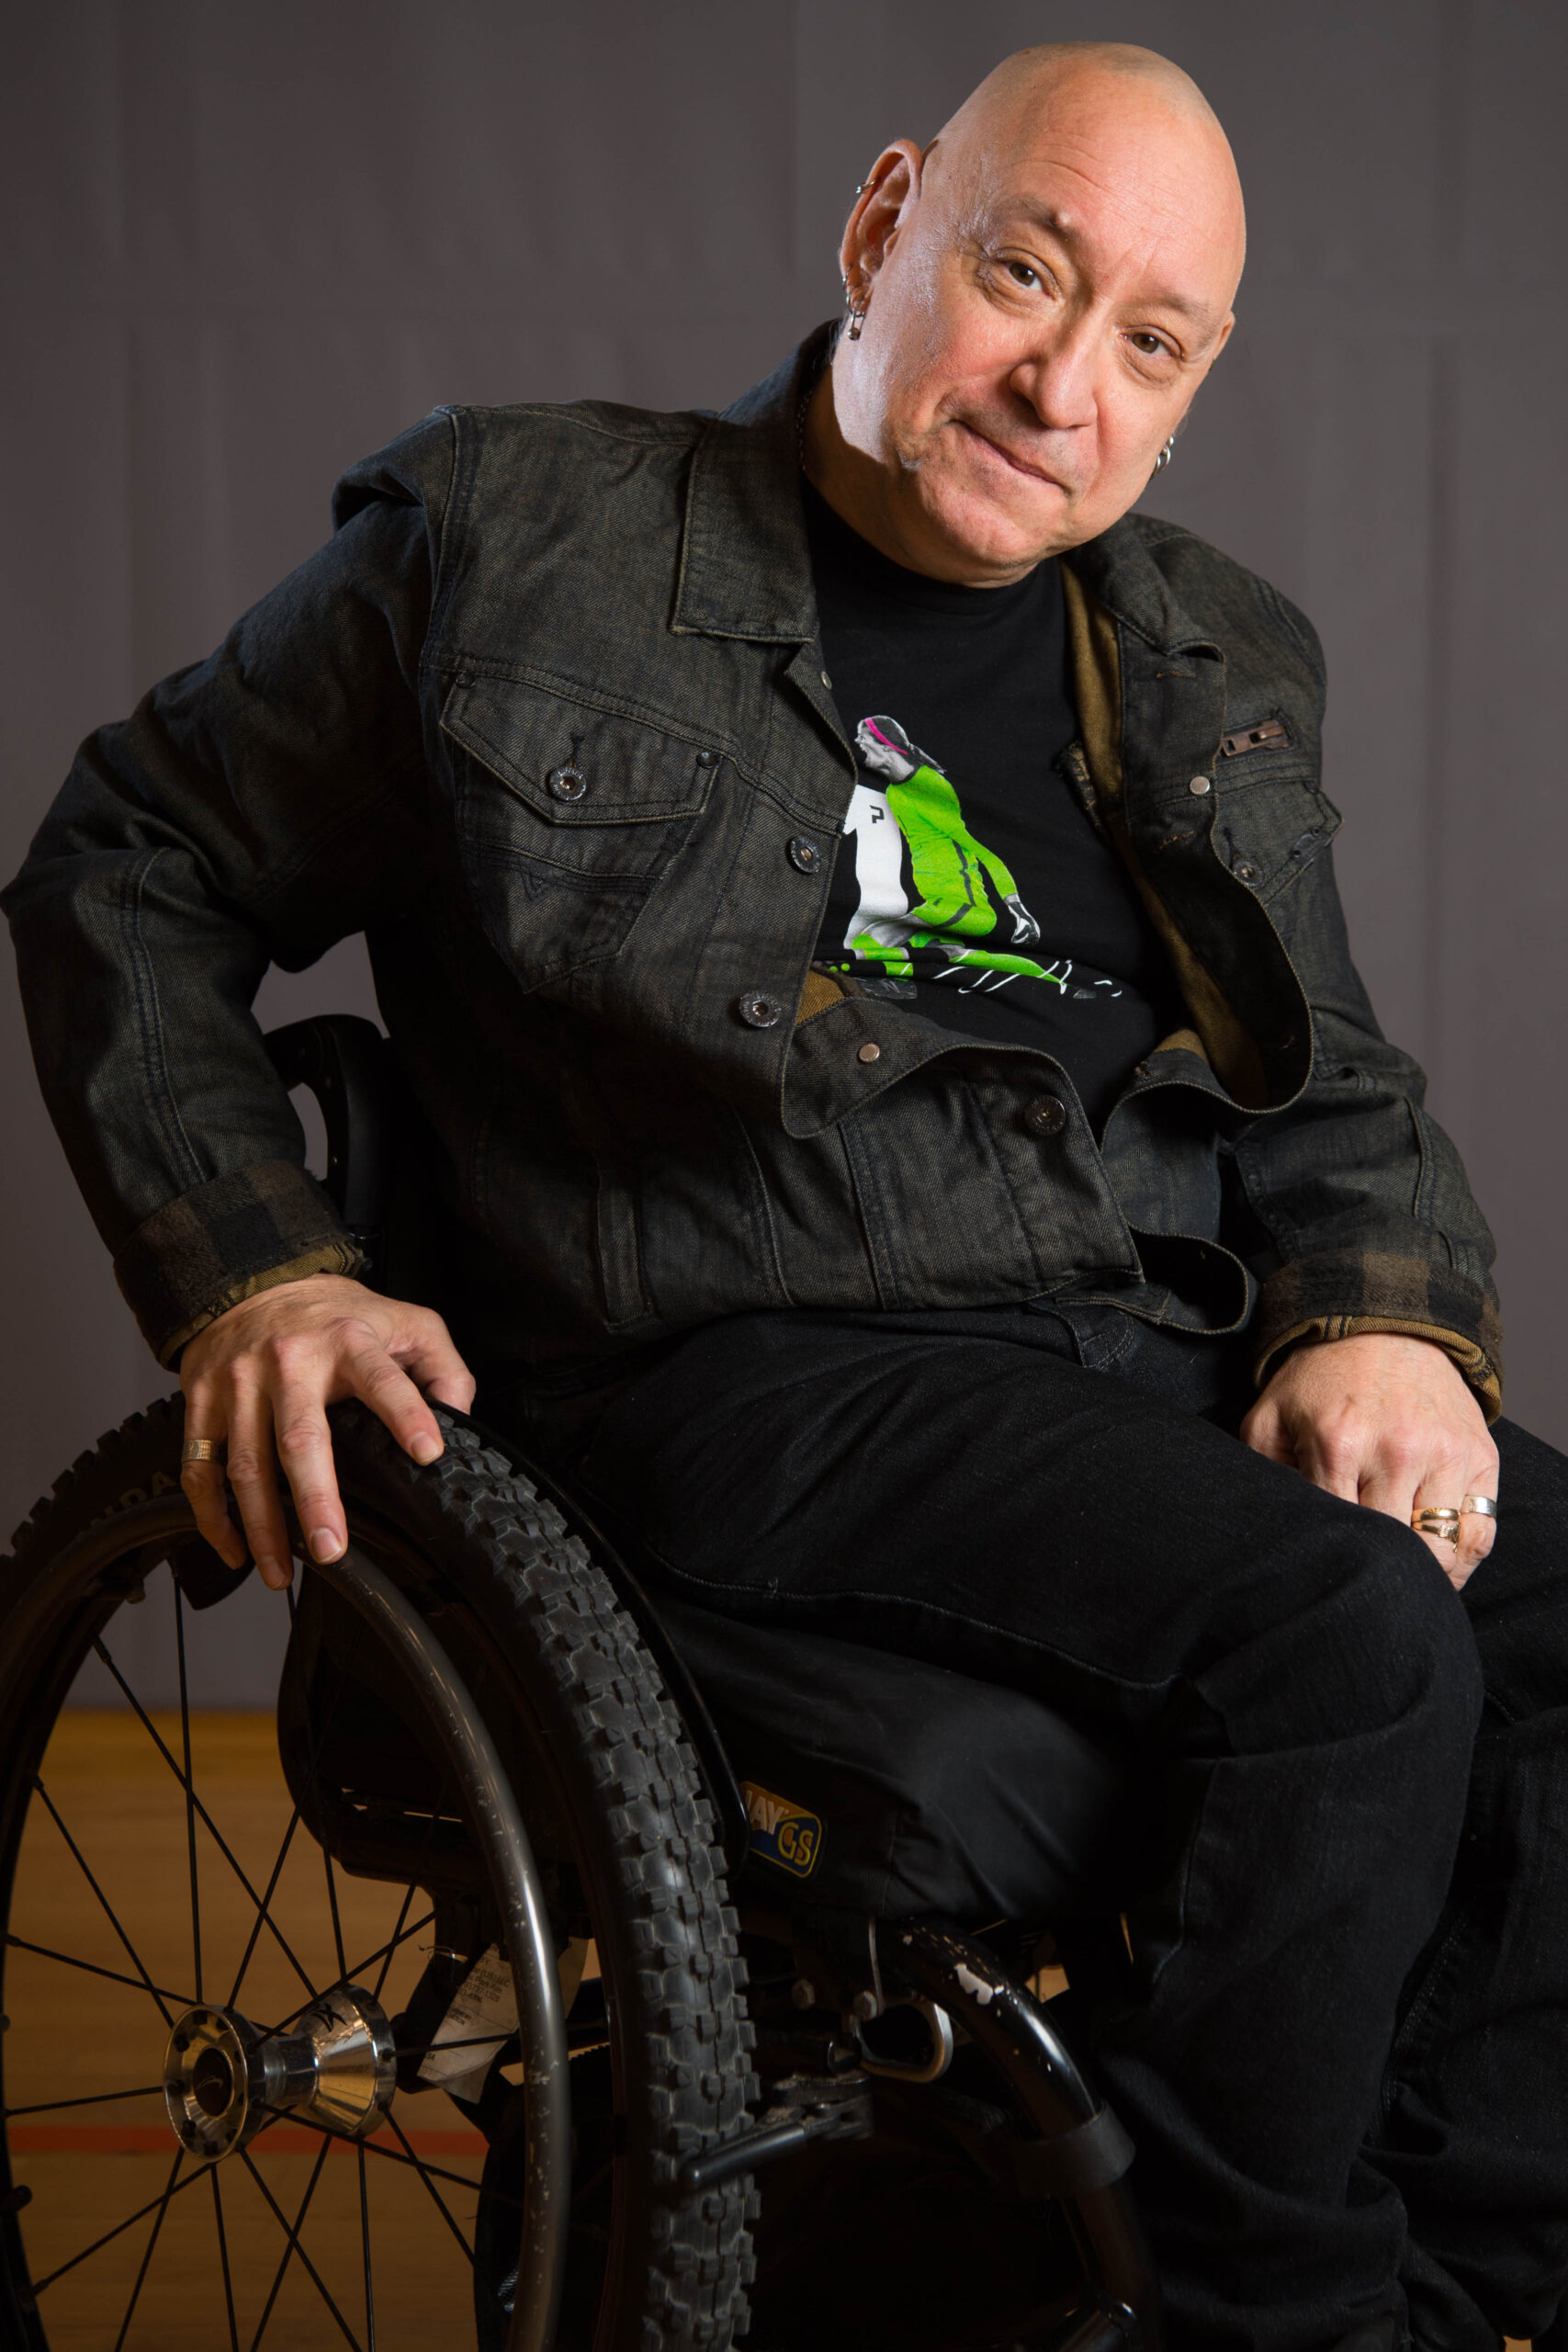 Man wearing black jacket, sitting in wheelchair.